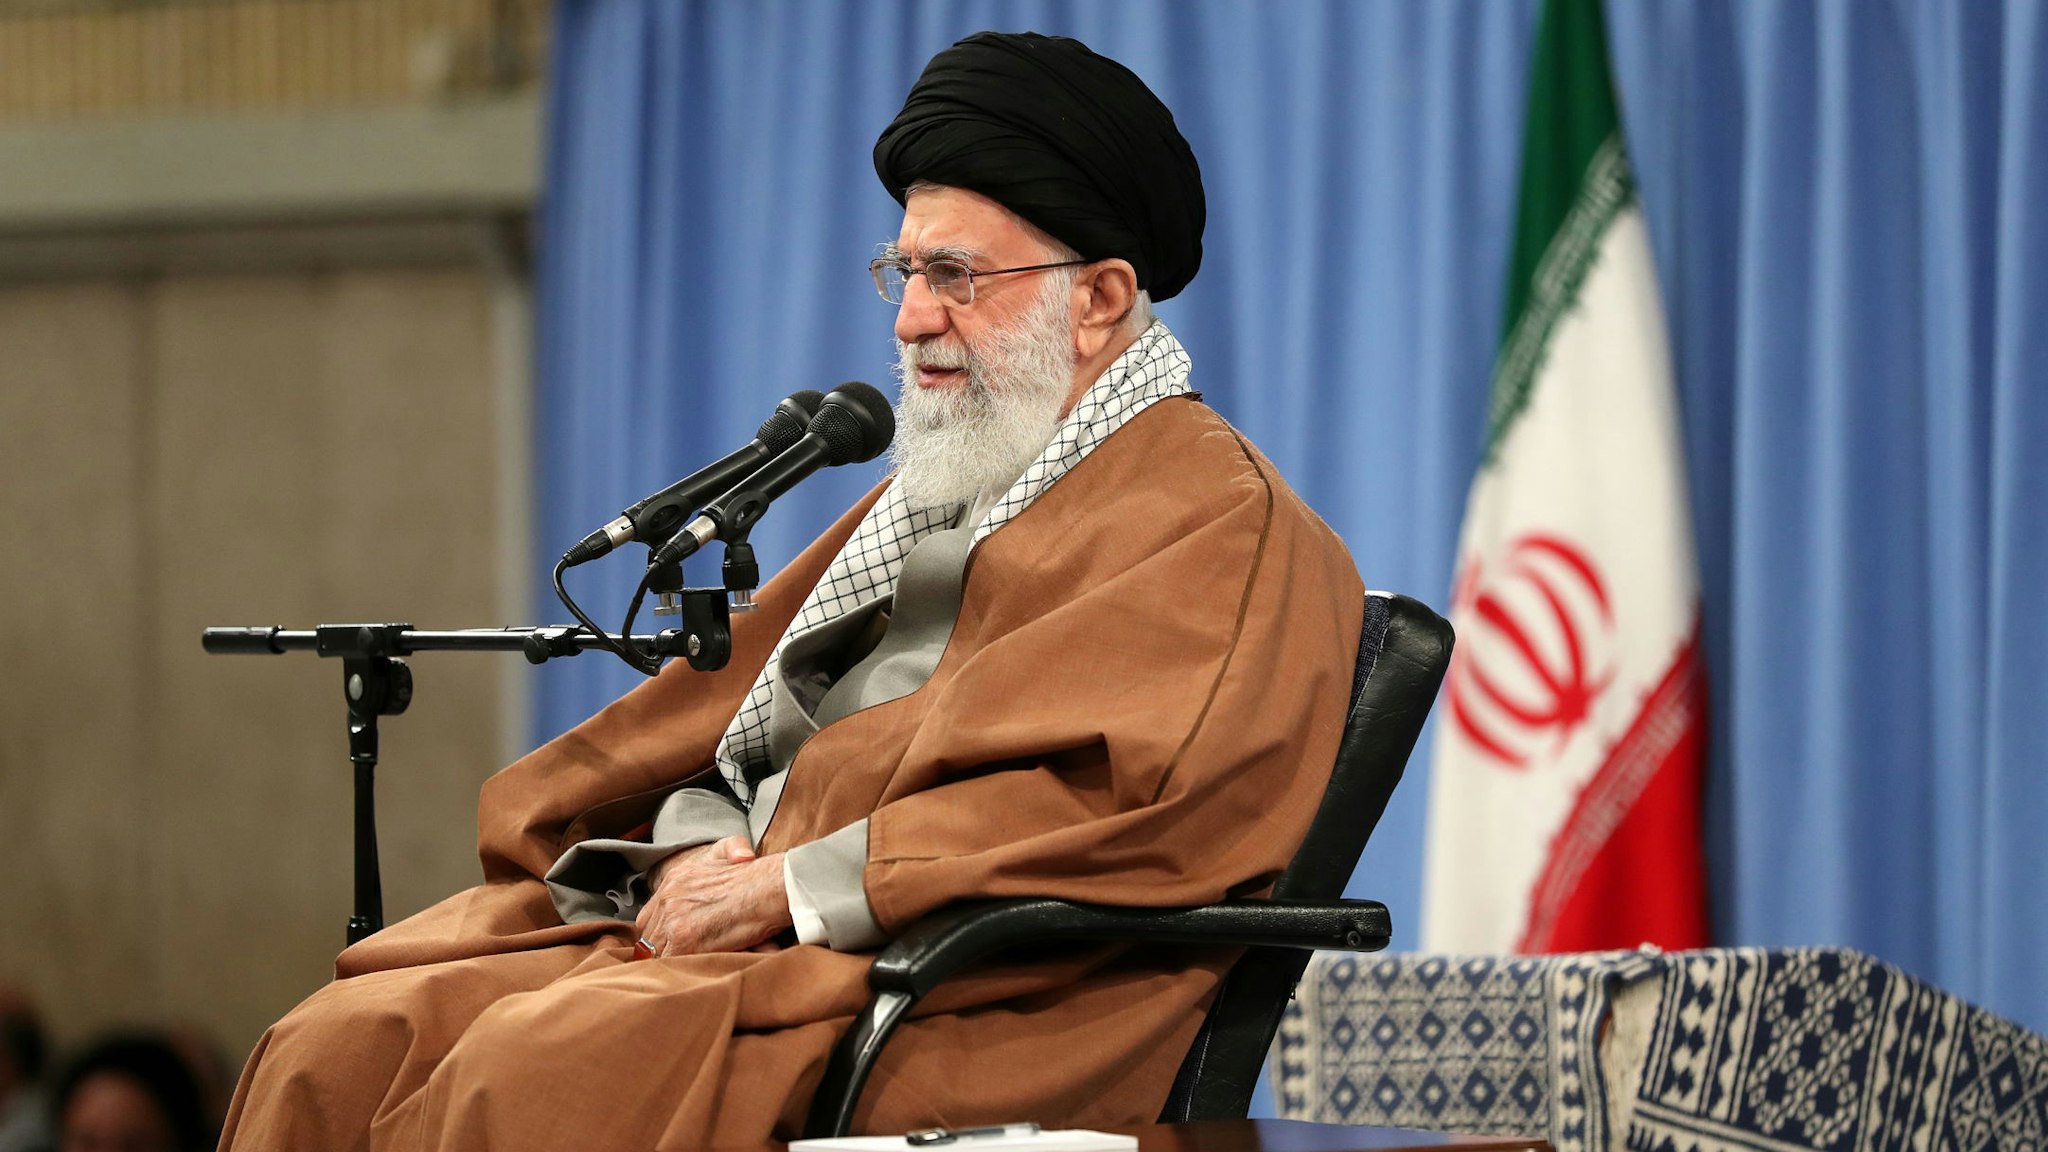 Iranian Supreme Leader Ayatollah Ali Khamanei presents statements regarding ongoing protests across Iran against petrol price increases, in Tehran, Iran on November 27, 2019.